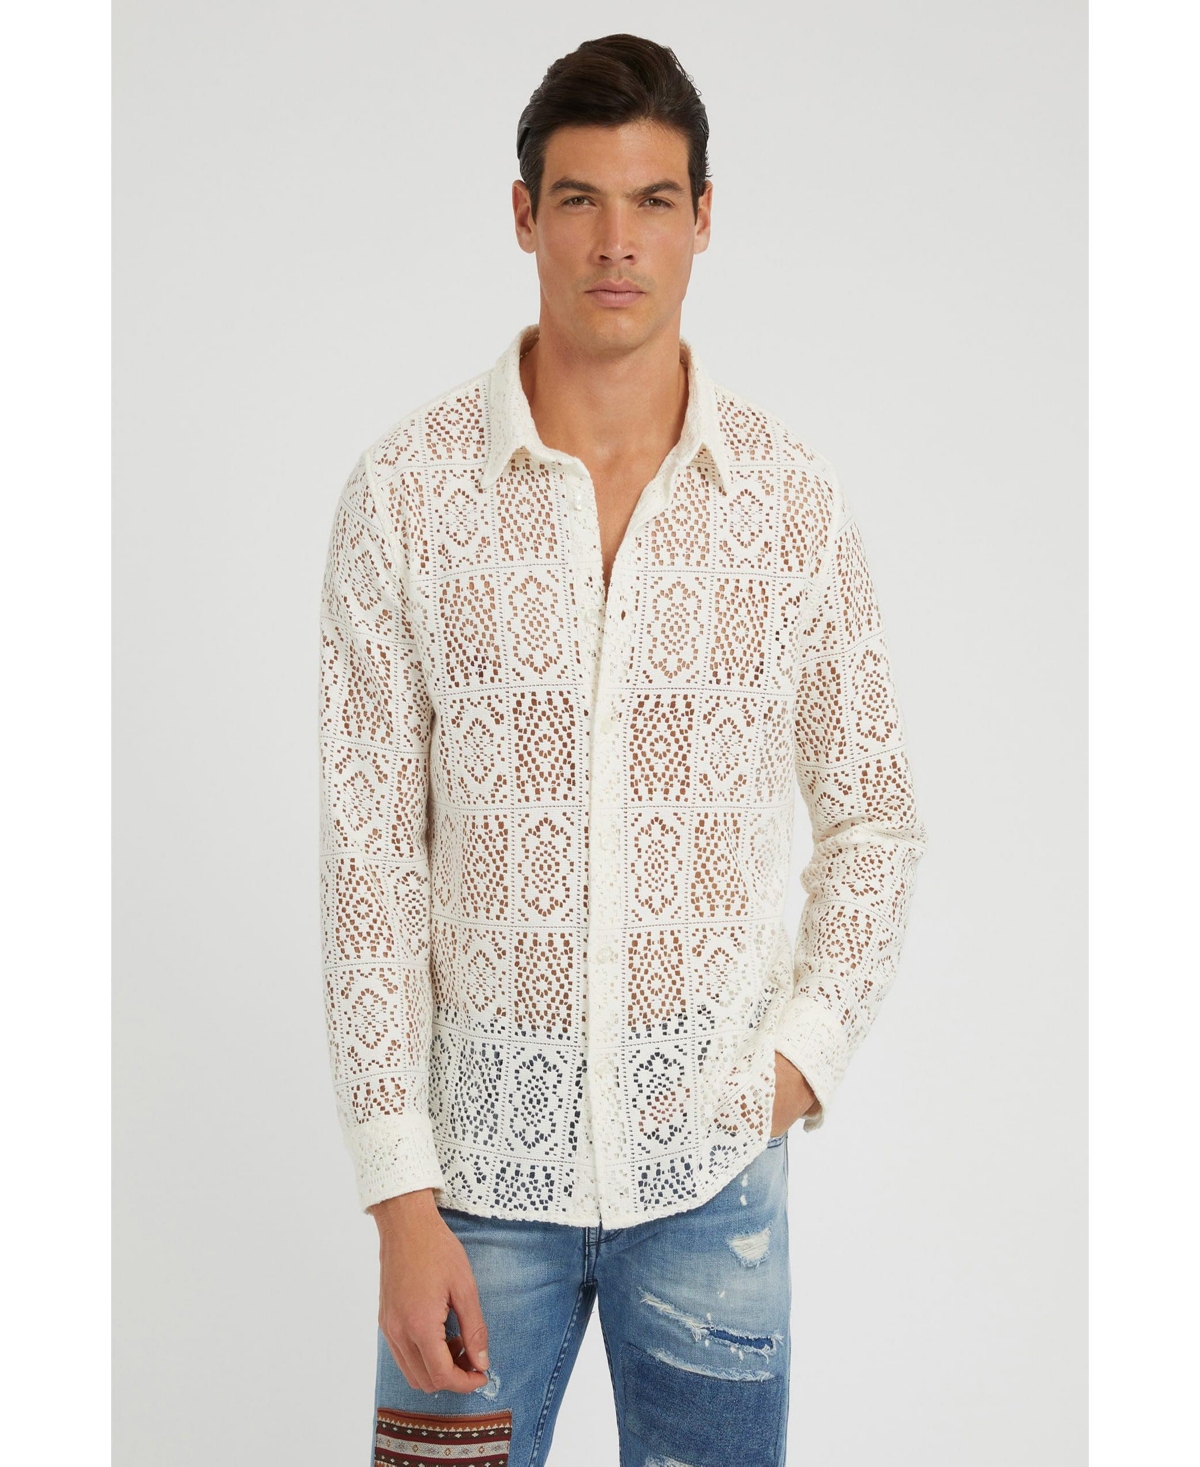 Guess Men's Long Sleeve Craft Crochet Shirt In White